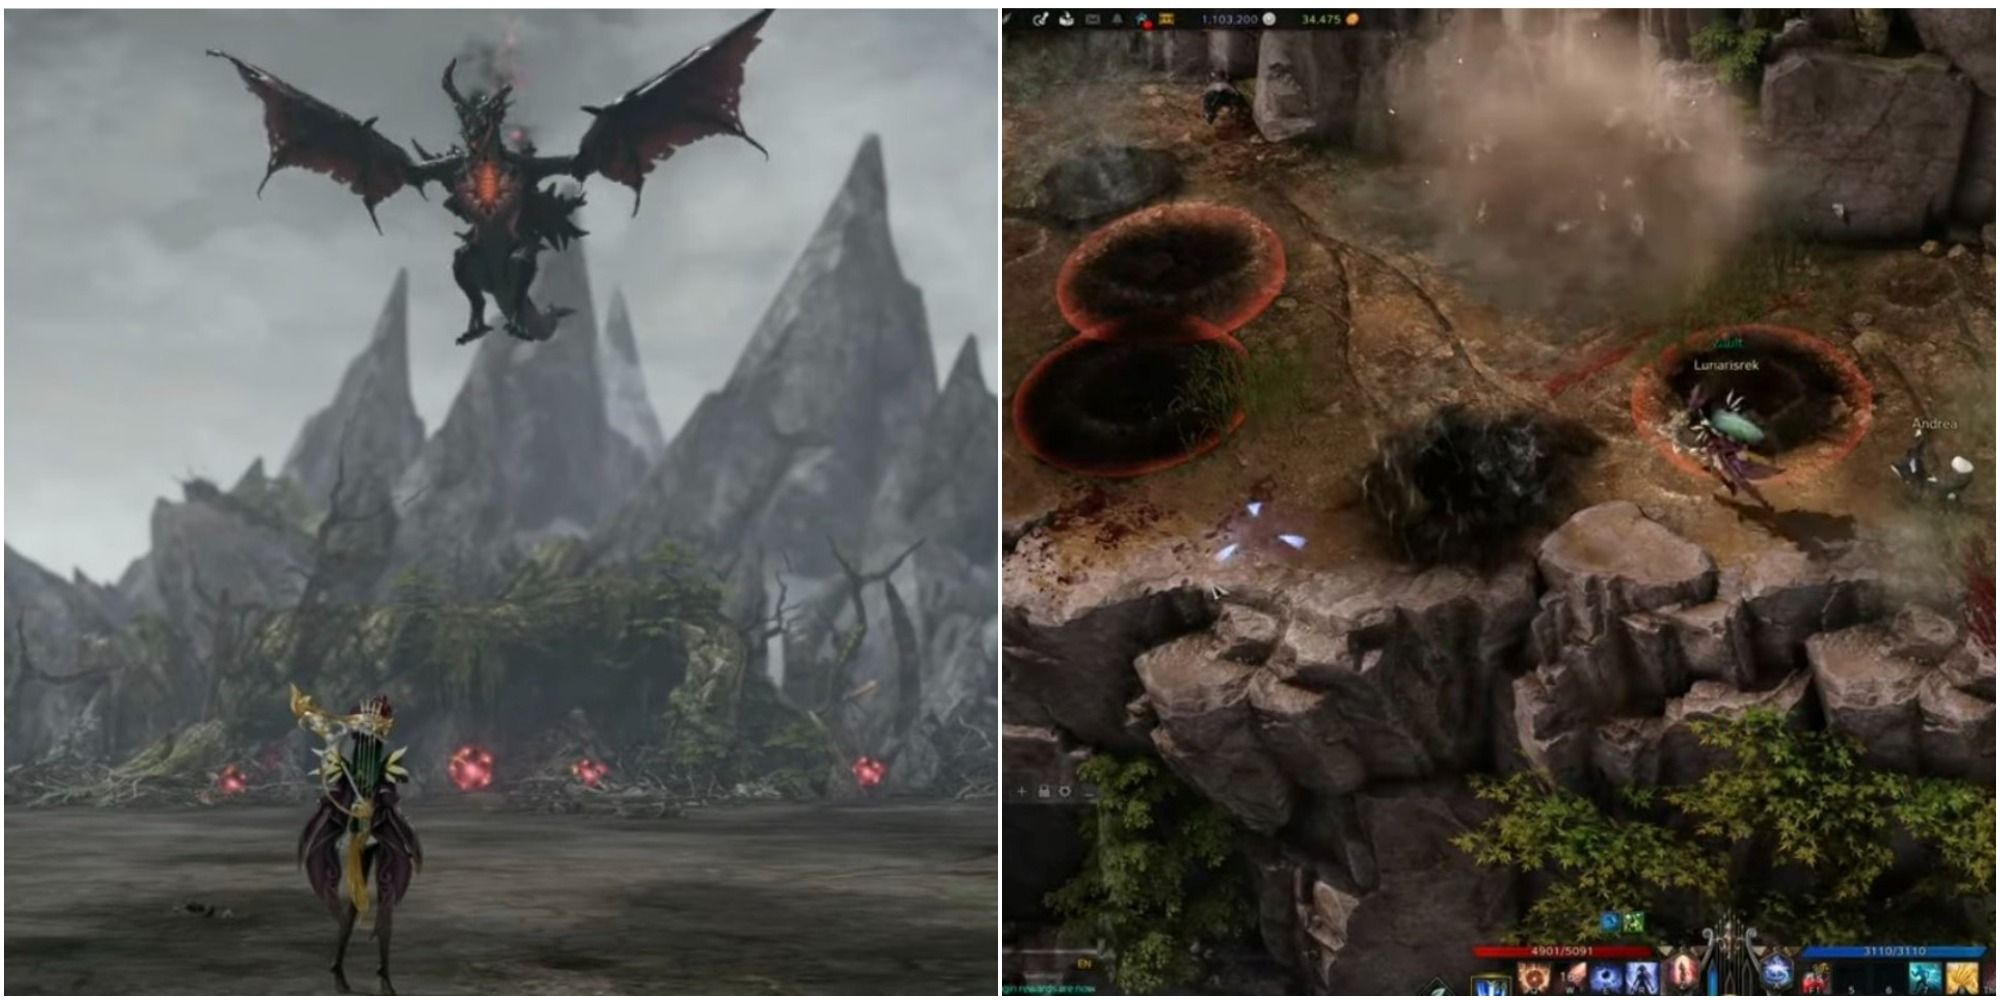 Lost Ark split image of Gorgon's Nest final boss and player running along rocky strip dodging bombs